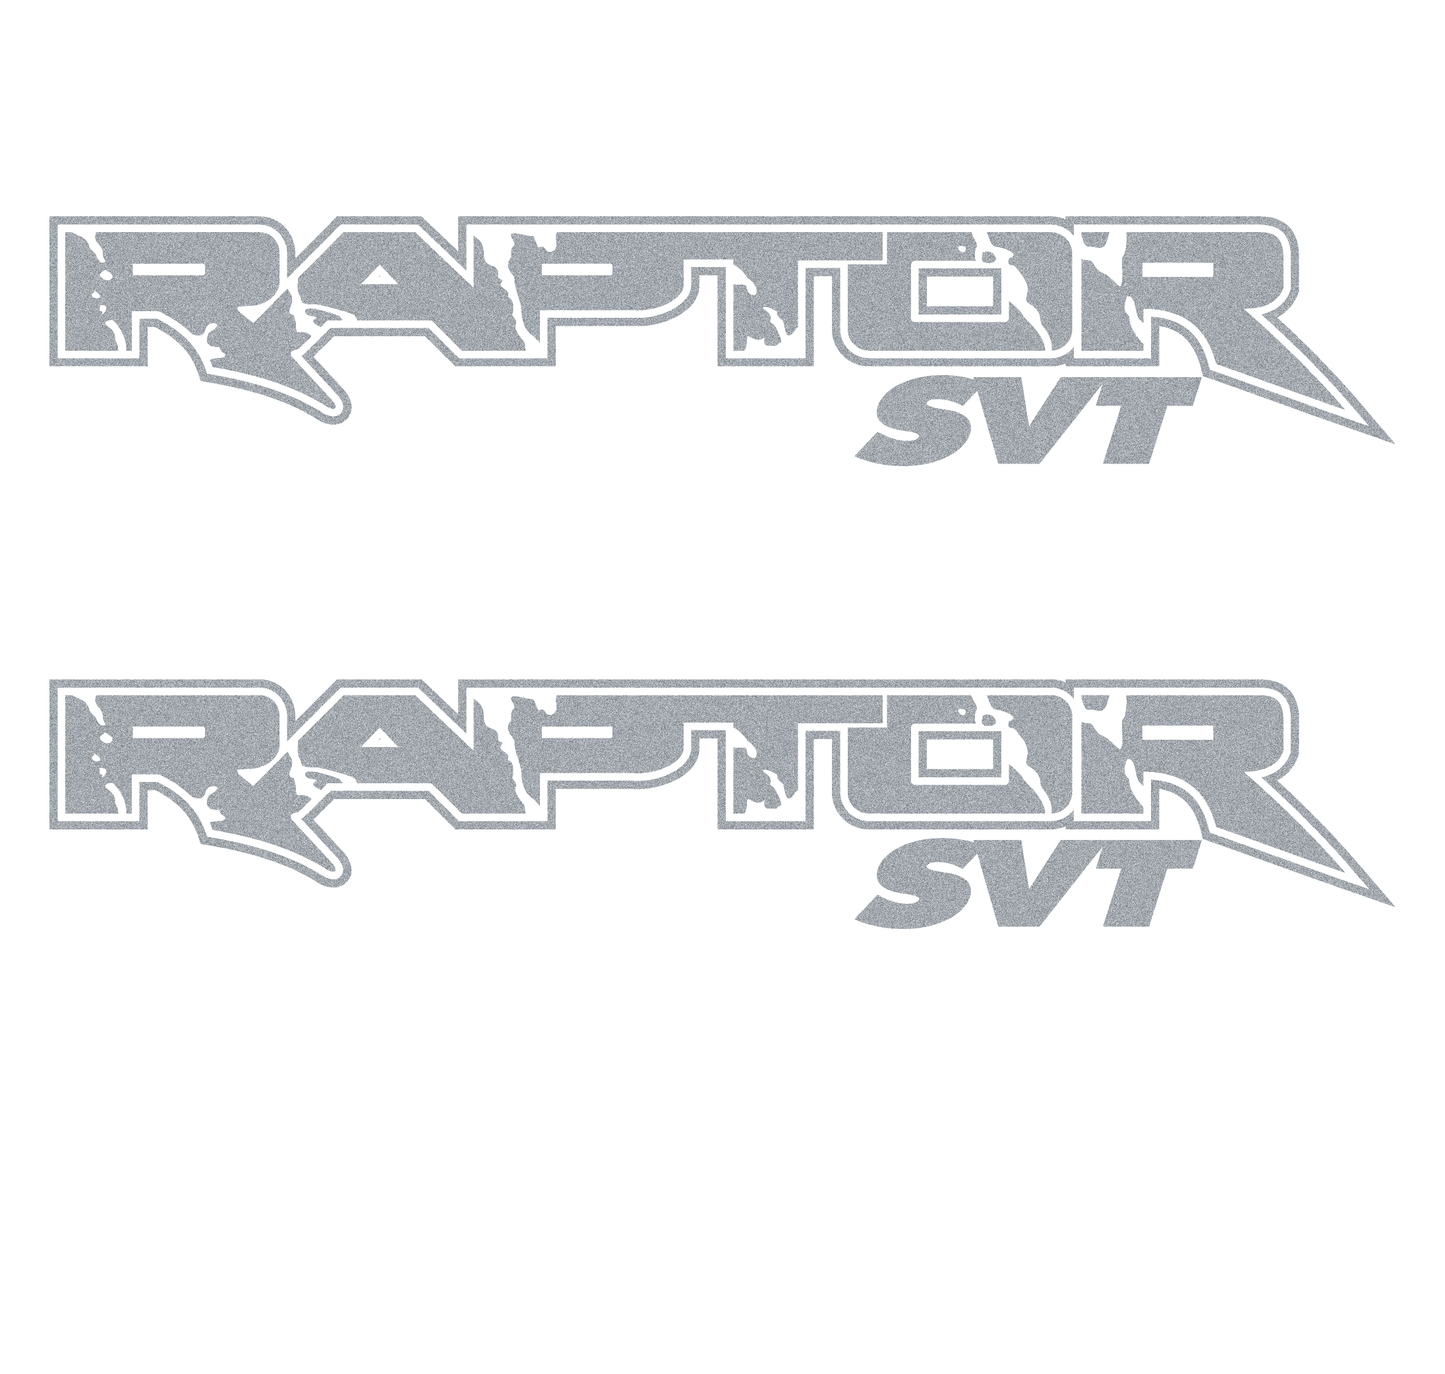 Shop Vinyl Design F-150 Raptor SVT Replacement Bedside Decals #010 Vehicle Decal Silver Metallic Shop Vinyl Design decals stickers